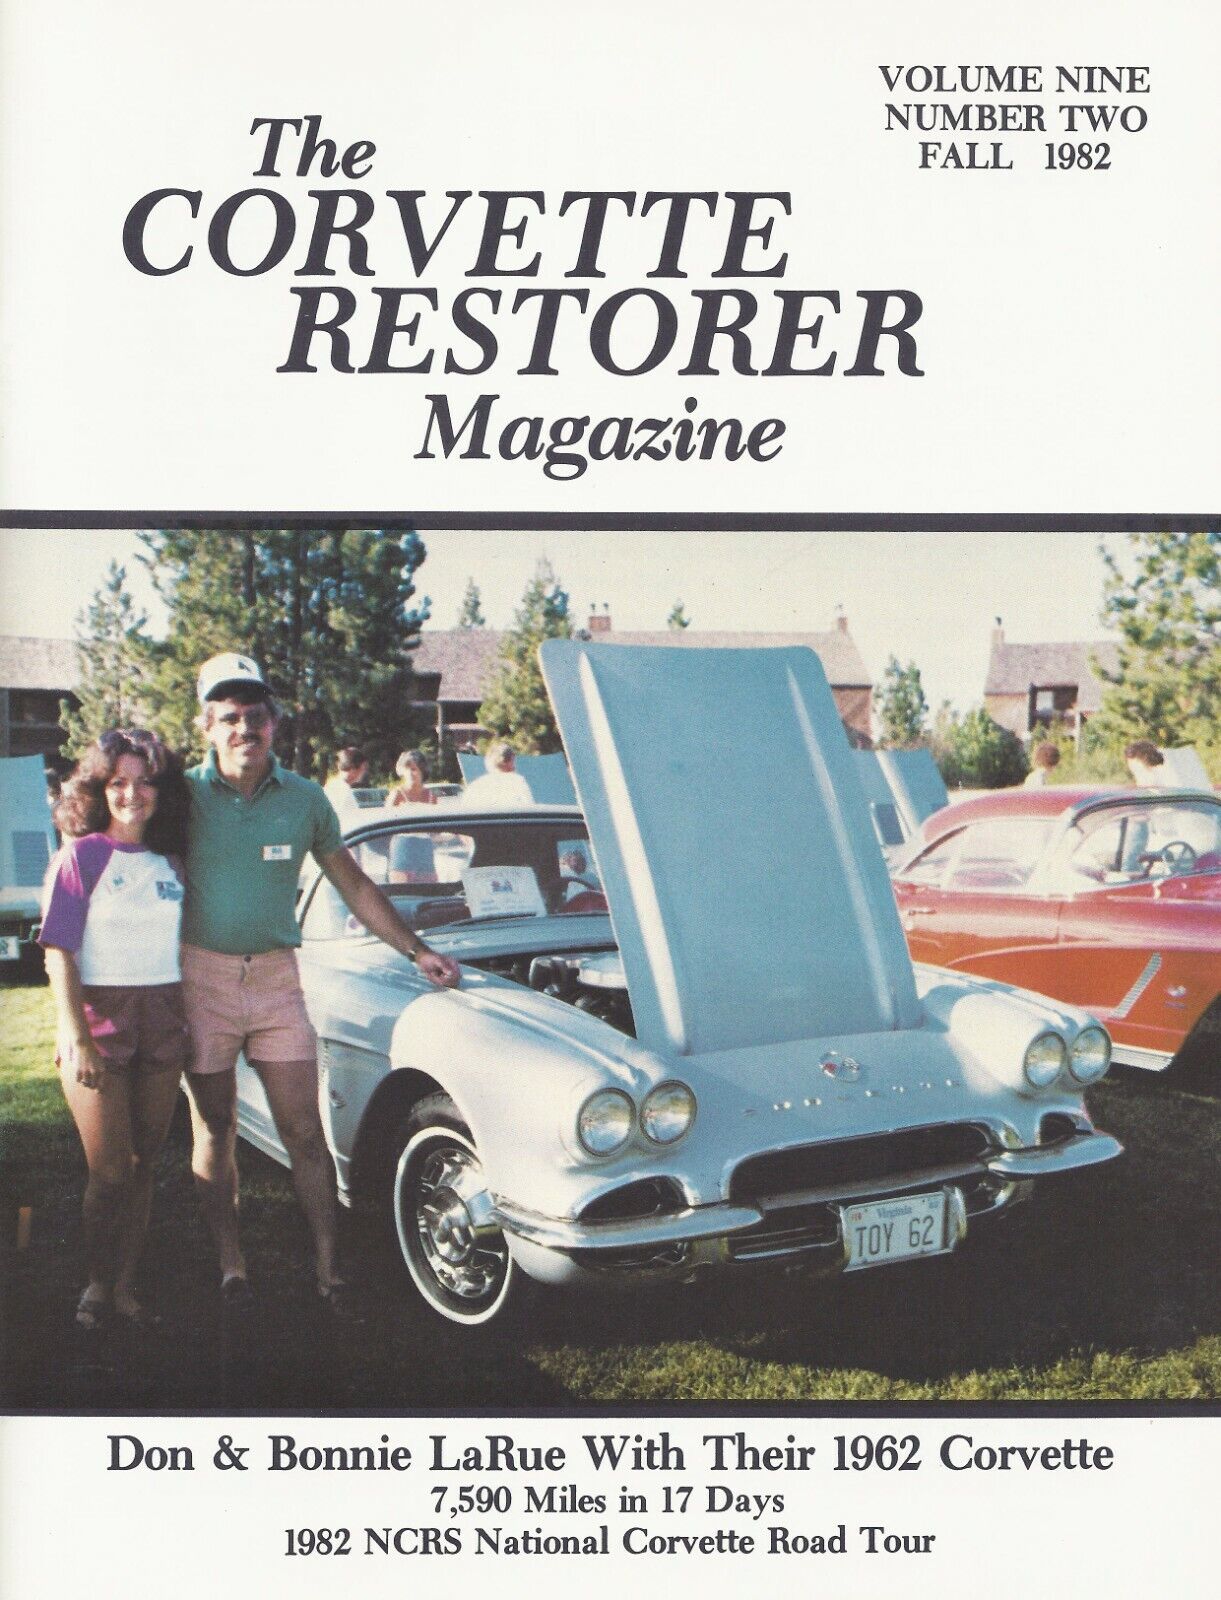 NCRS The Corvette Restorer Magazine 9#2 Fall 1982 1958 - 1962 Dash Pads #3